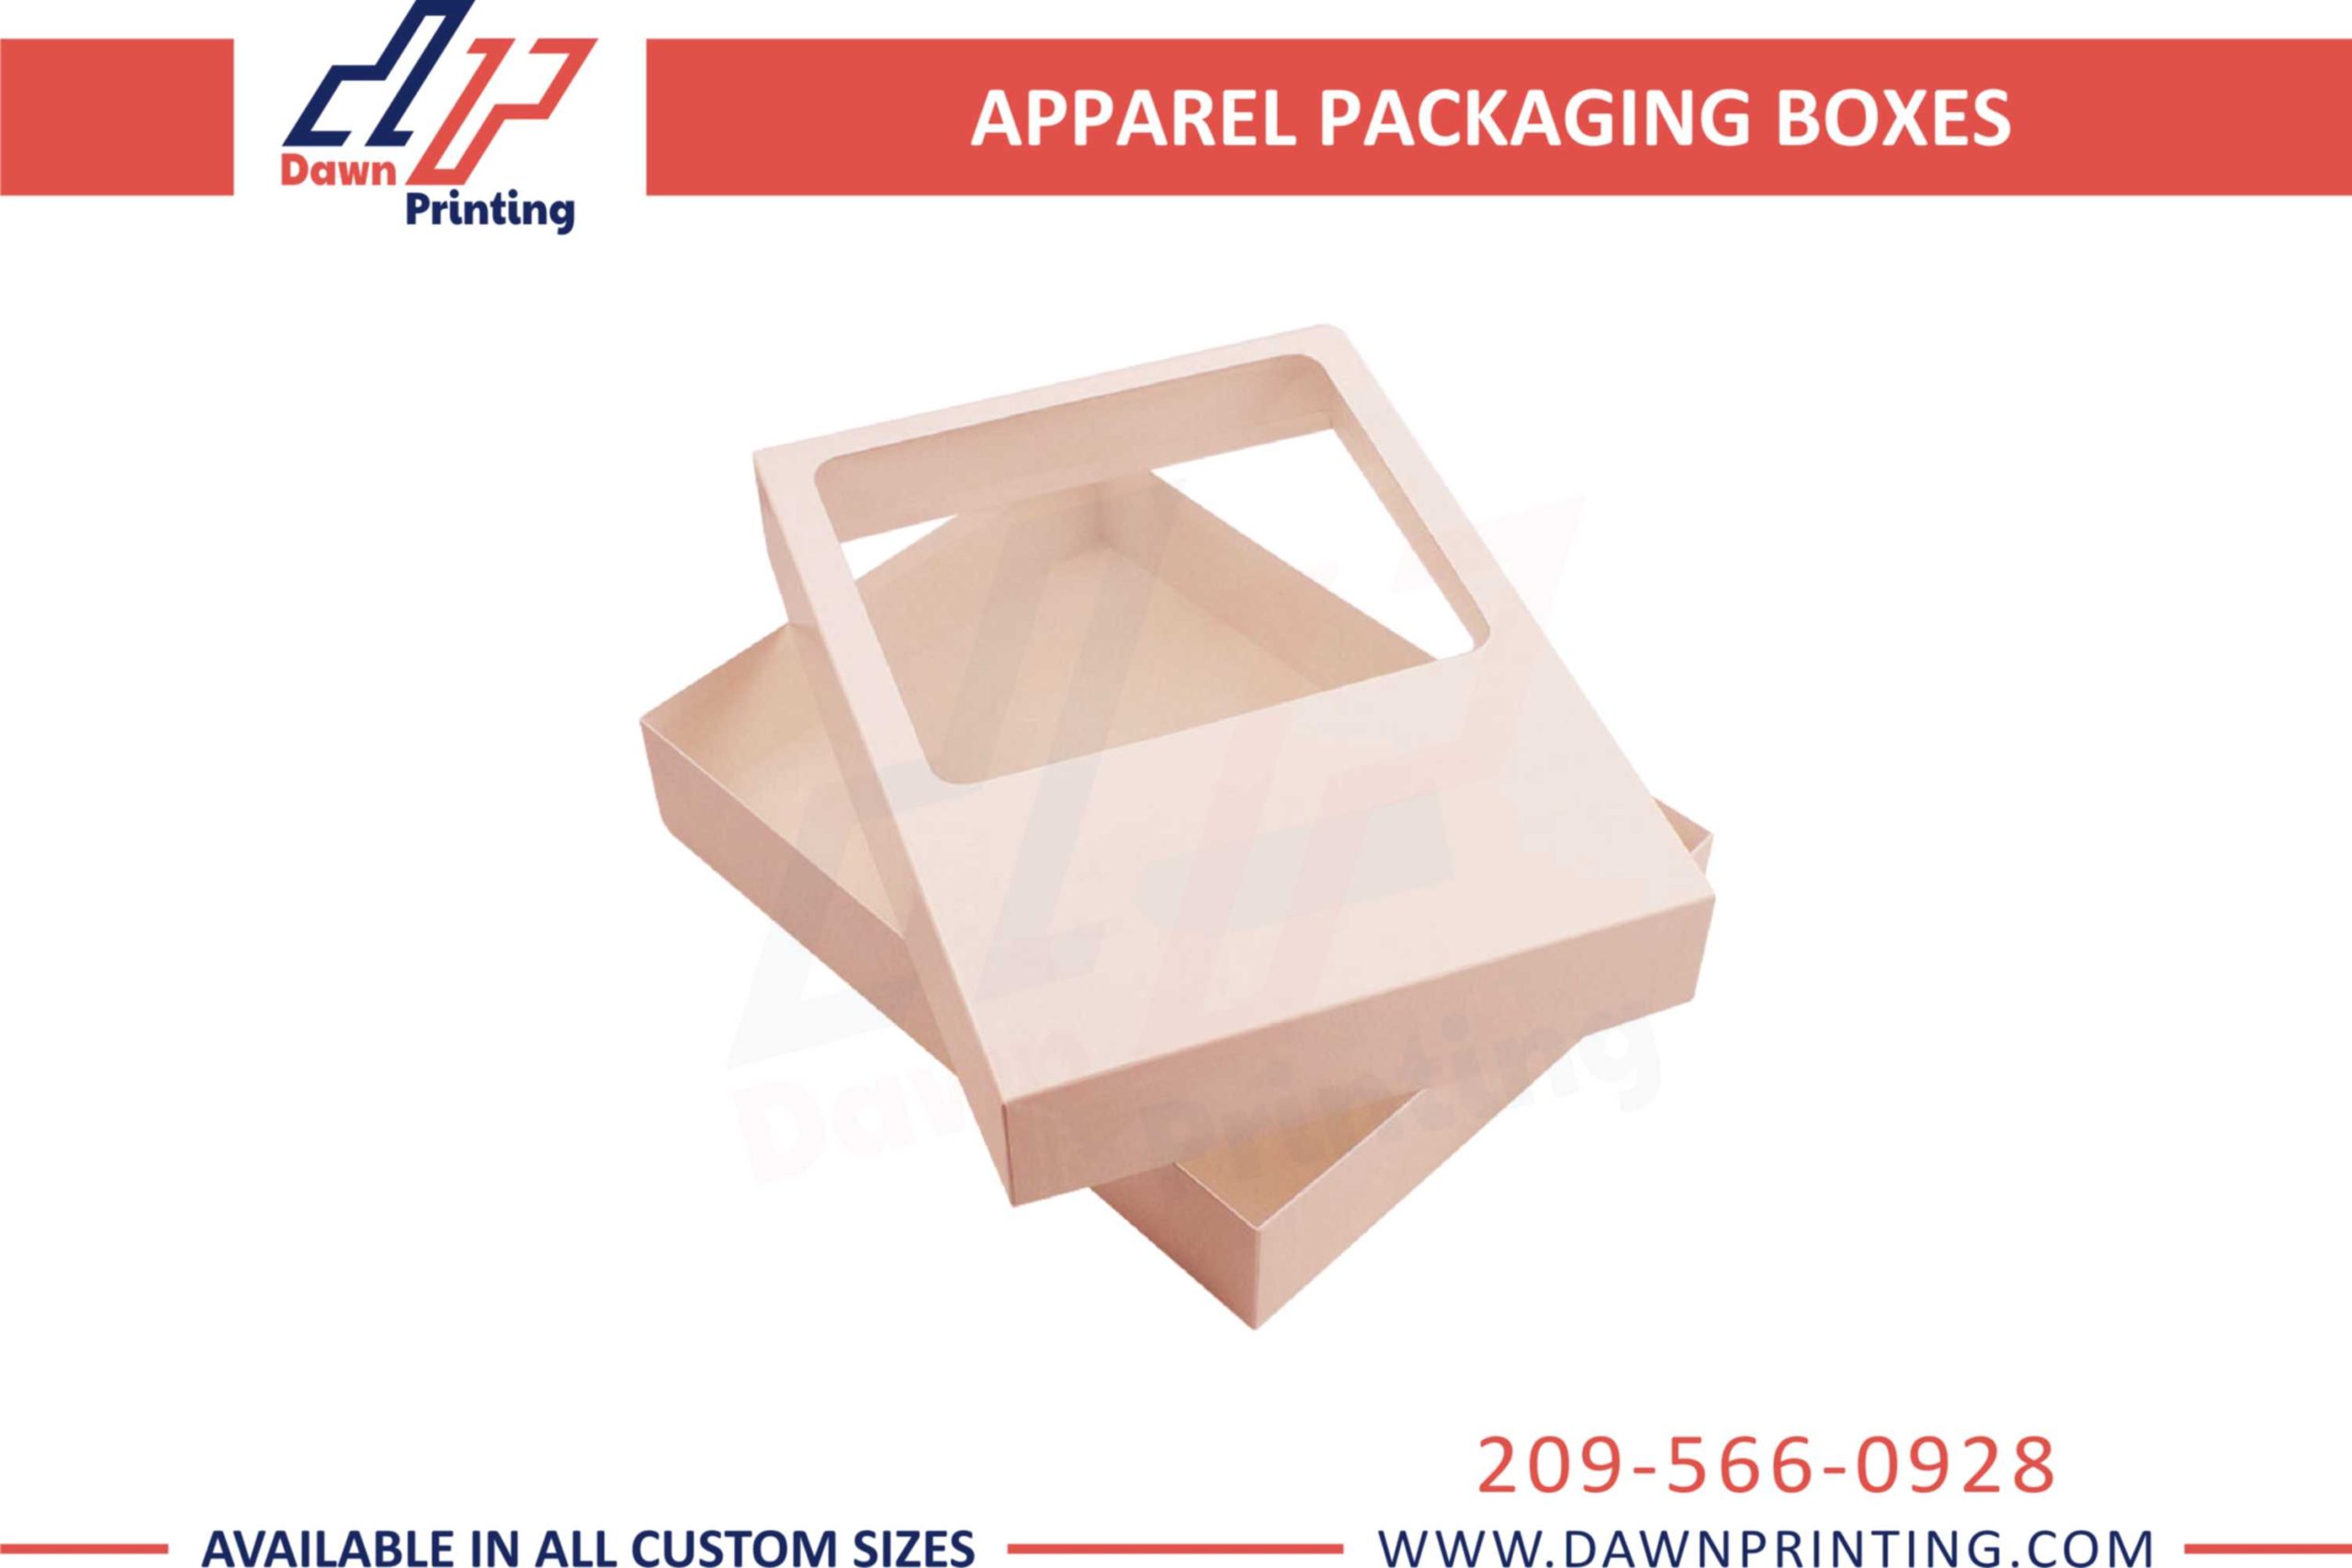 Apparel Packaging Boxes - Dawn Printing